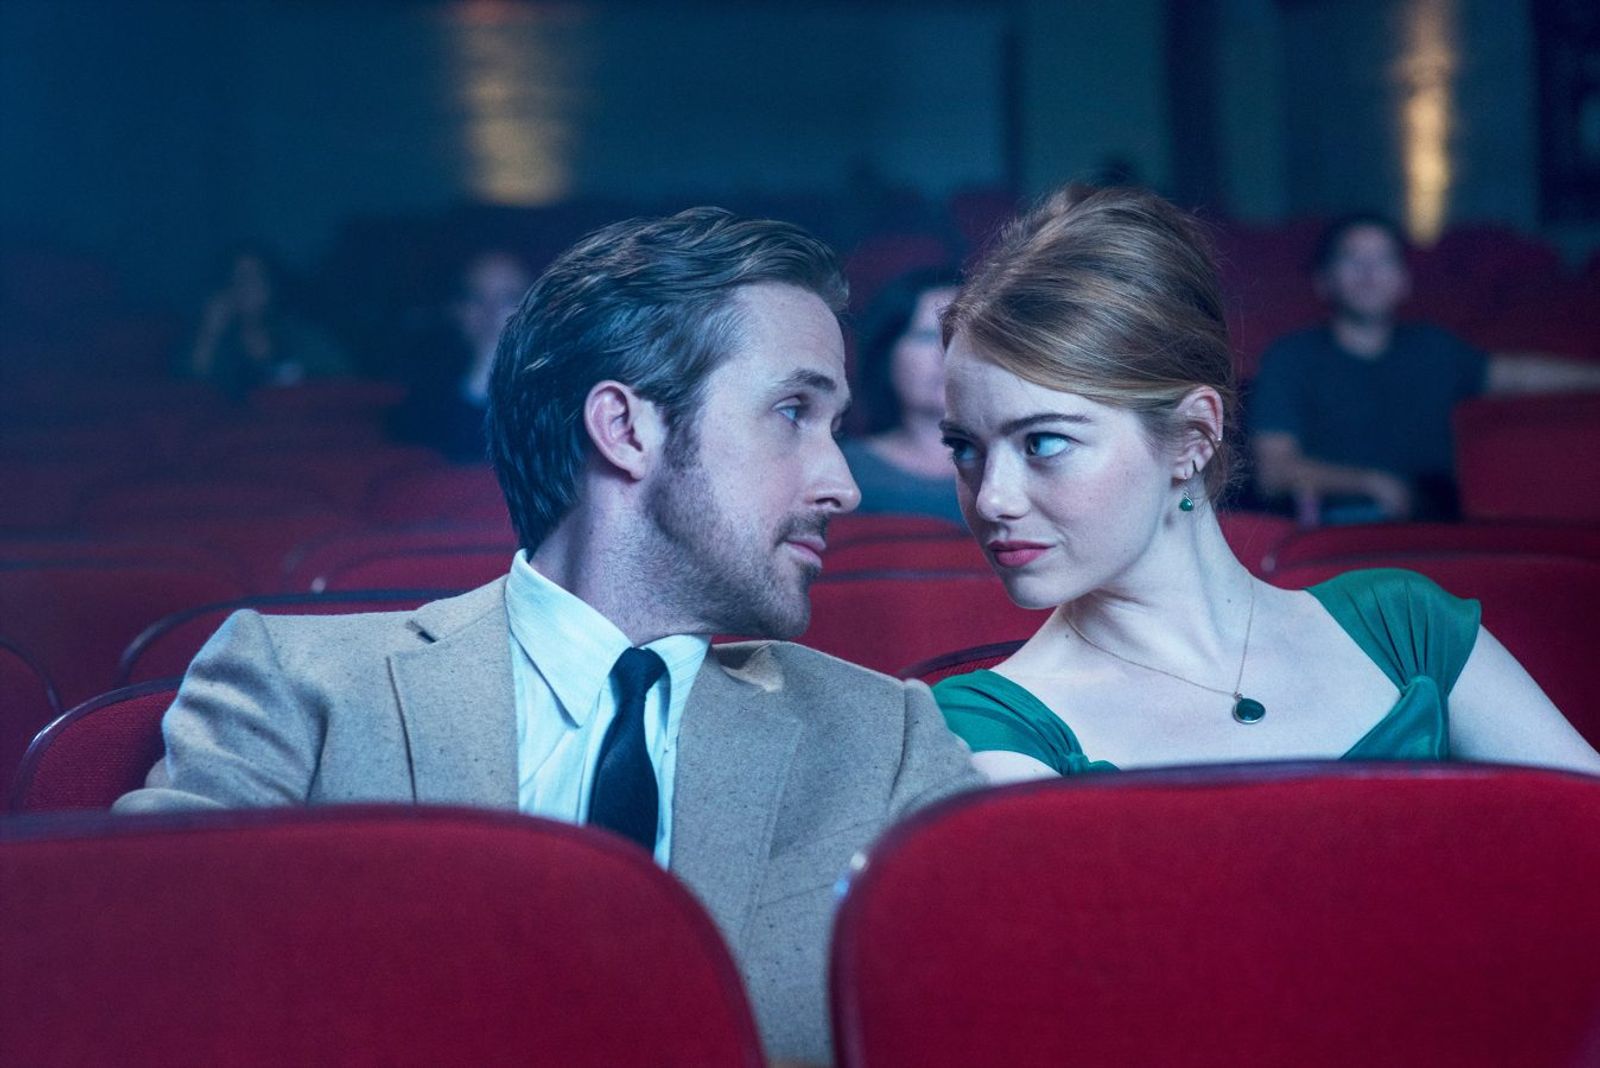 15 Best Romantic Movies On Netflix Ranked According To Imdb 